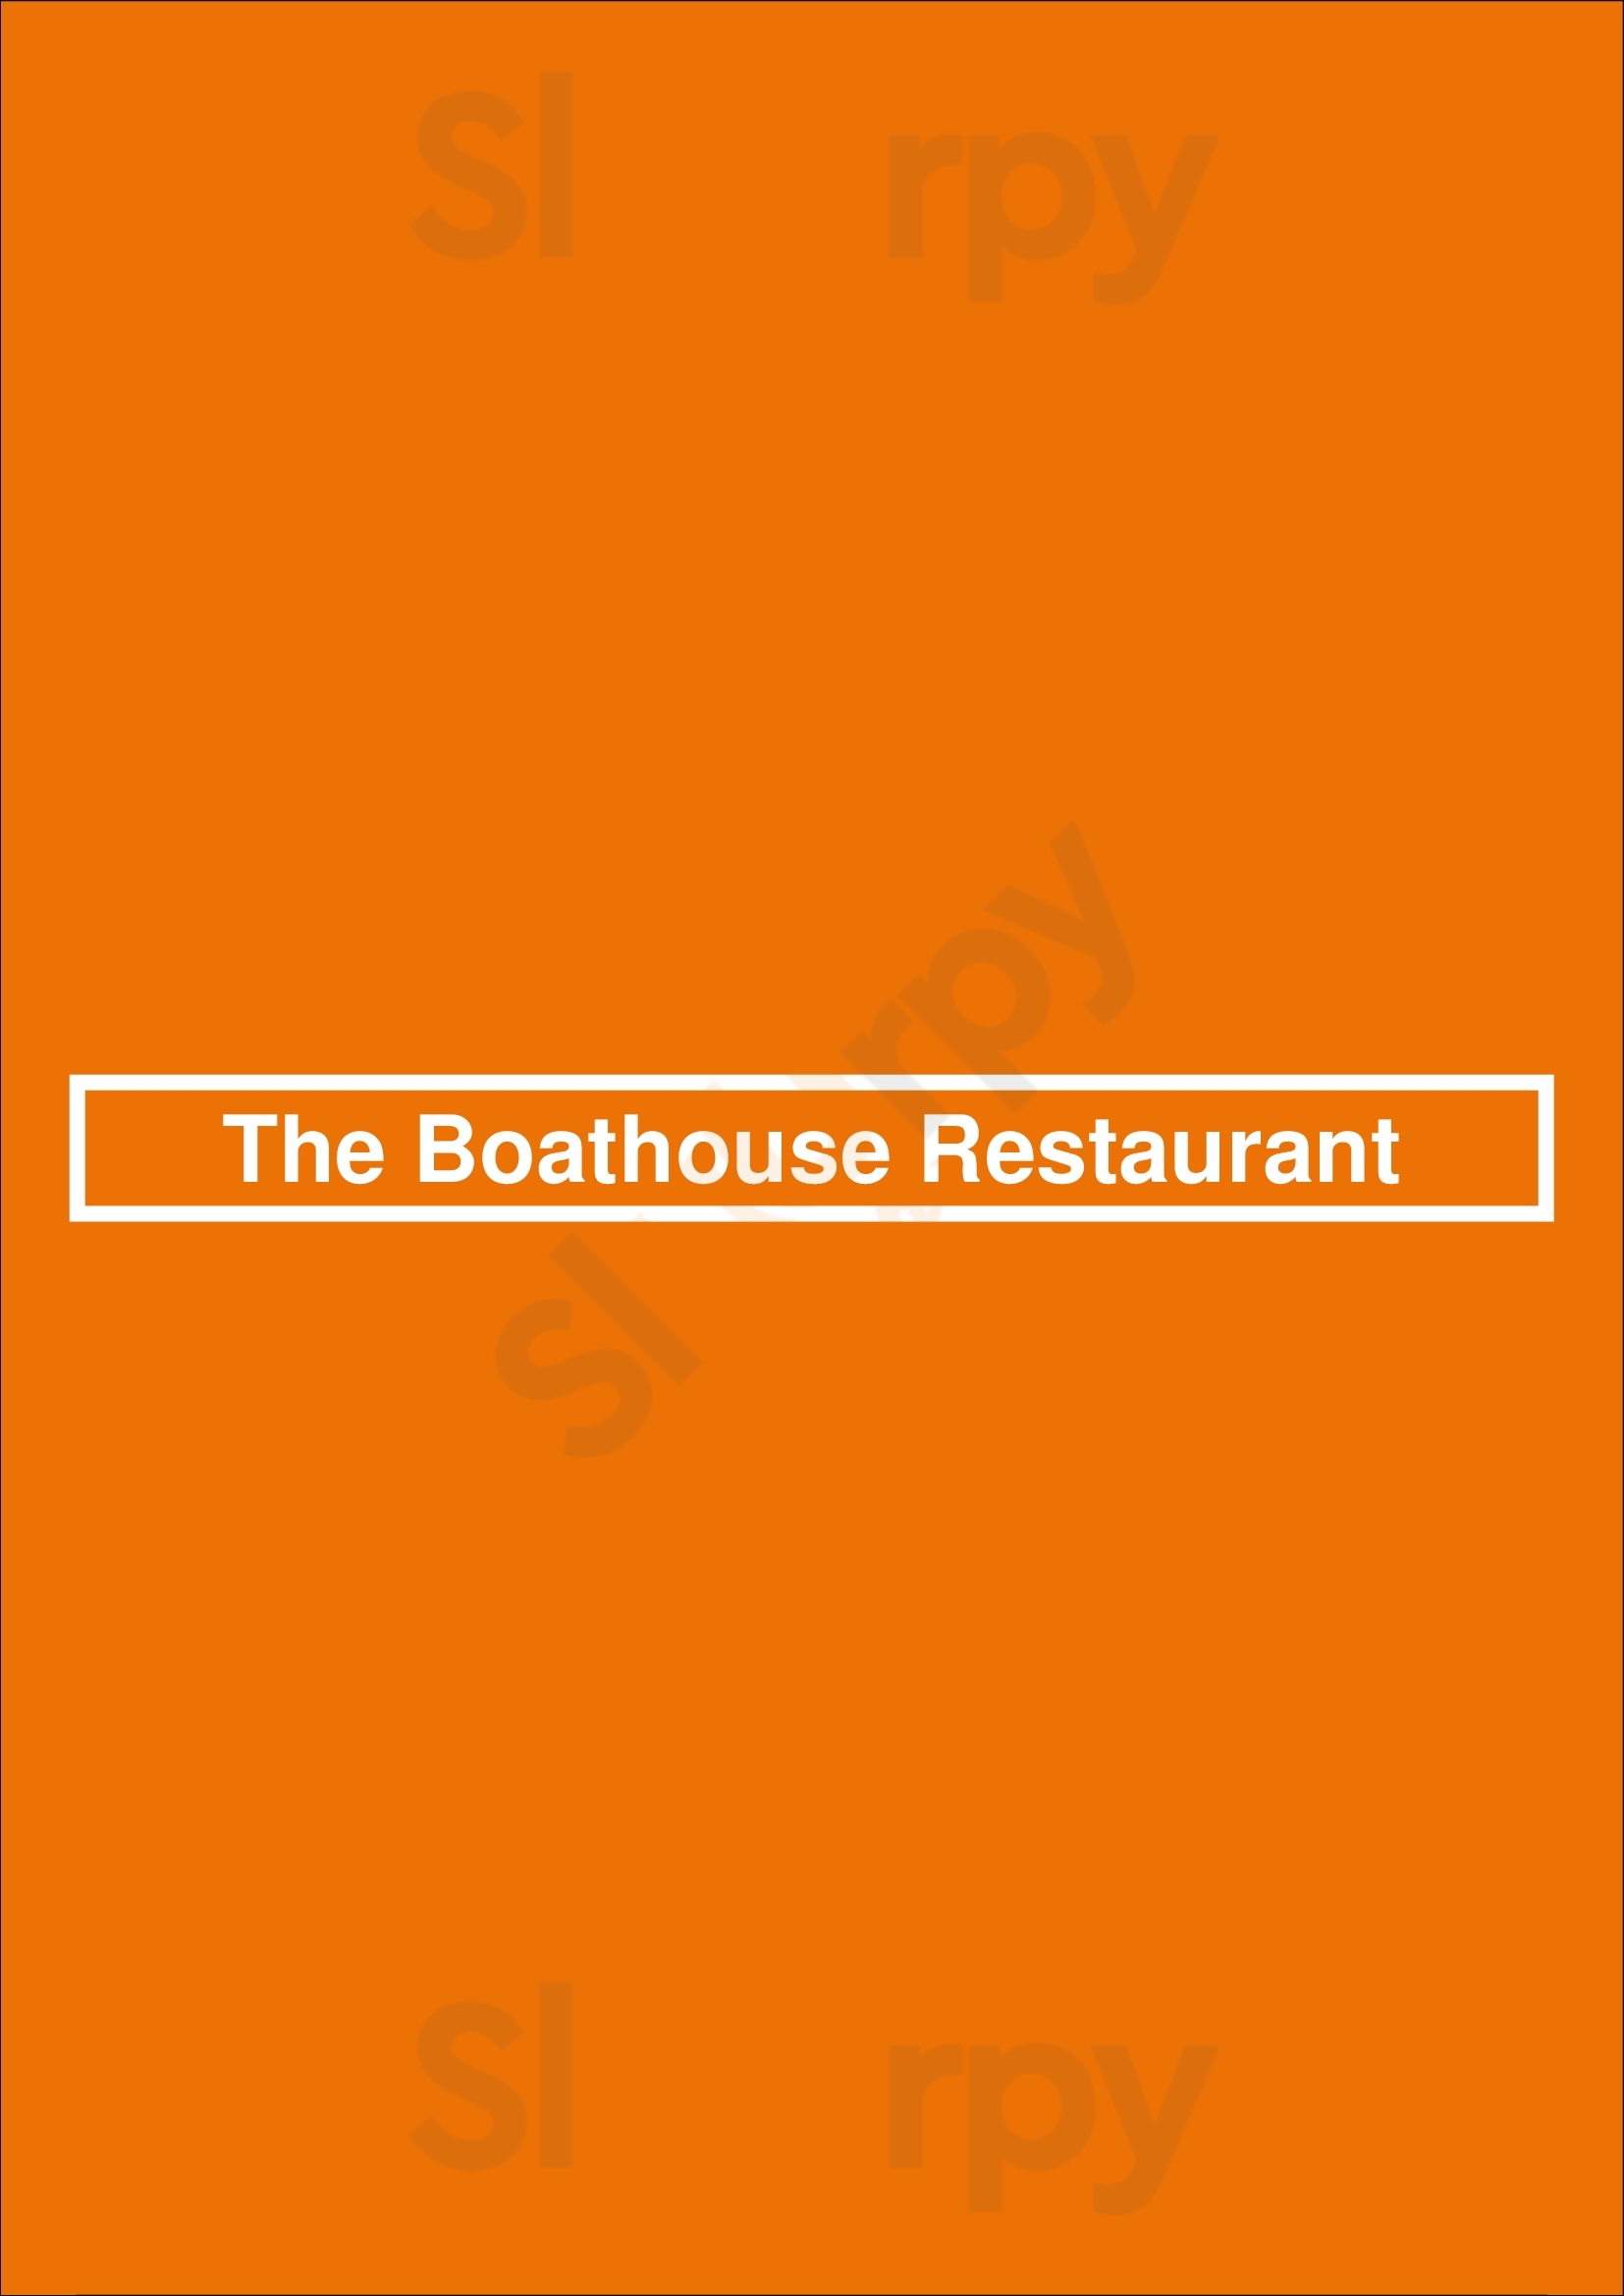 The Boathouse Restaurant Vancouver Menu - 1